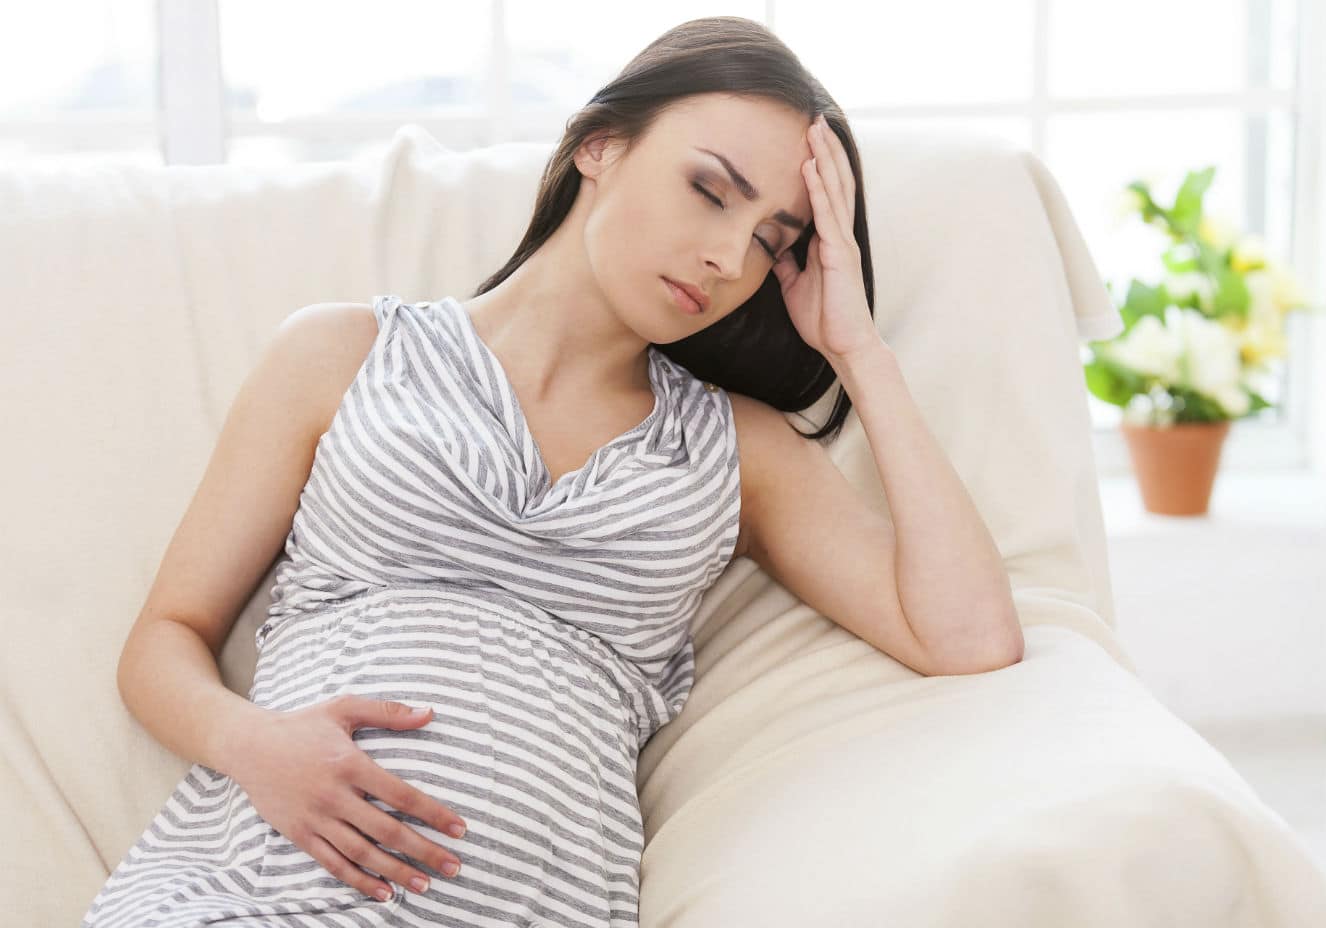 combater azia gravidez